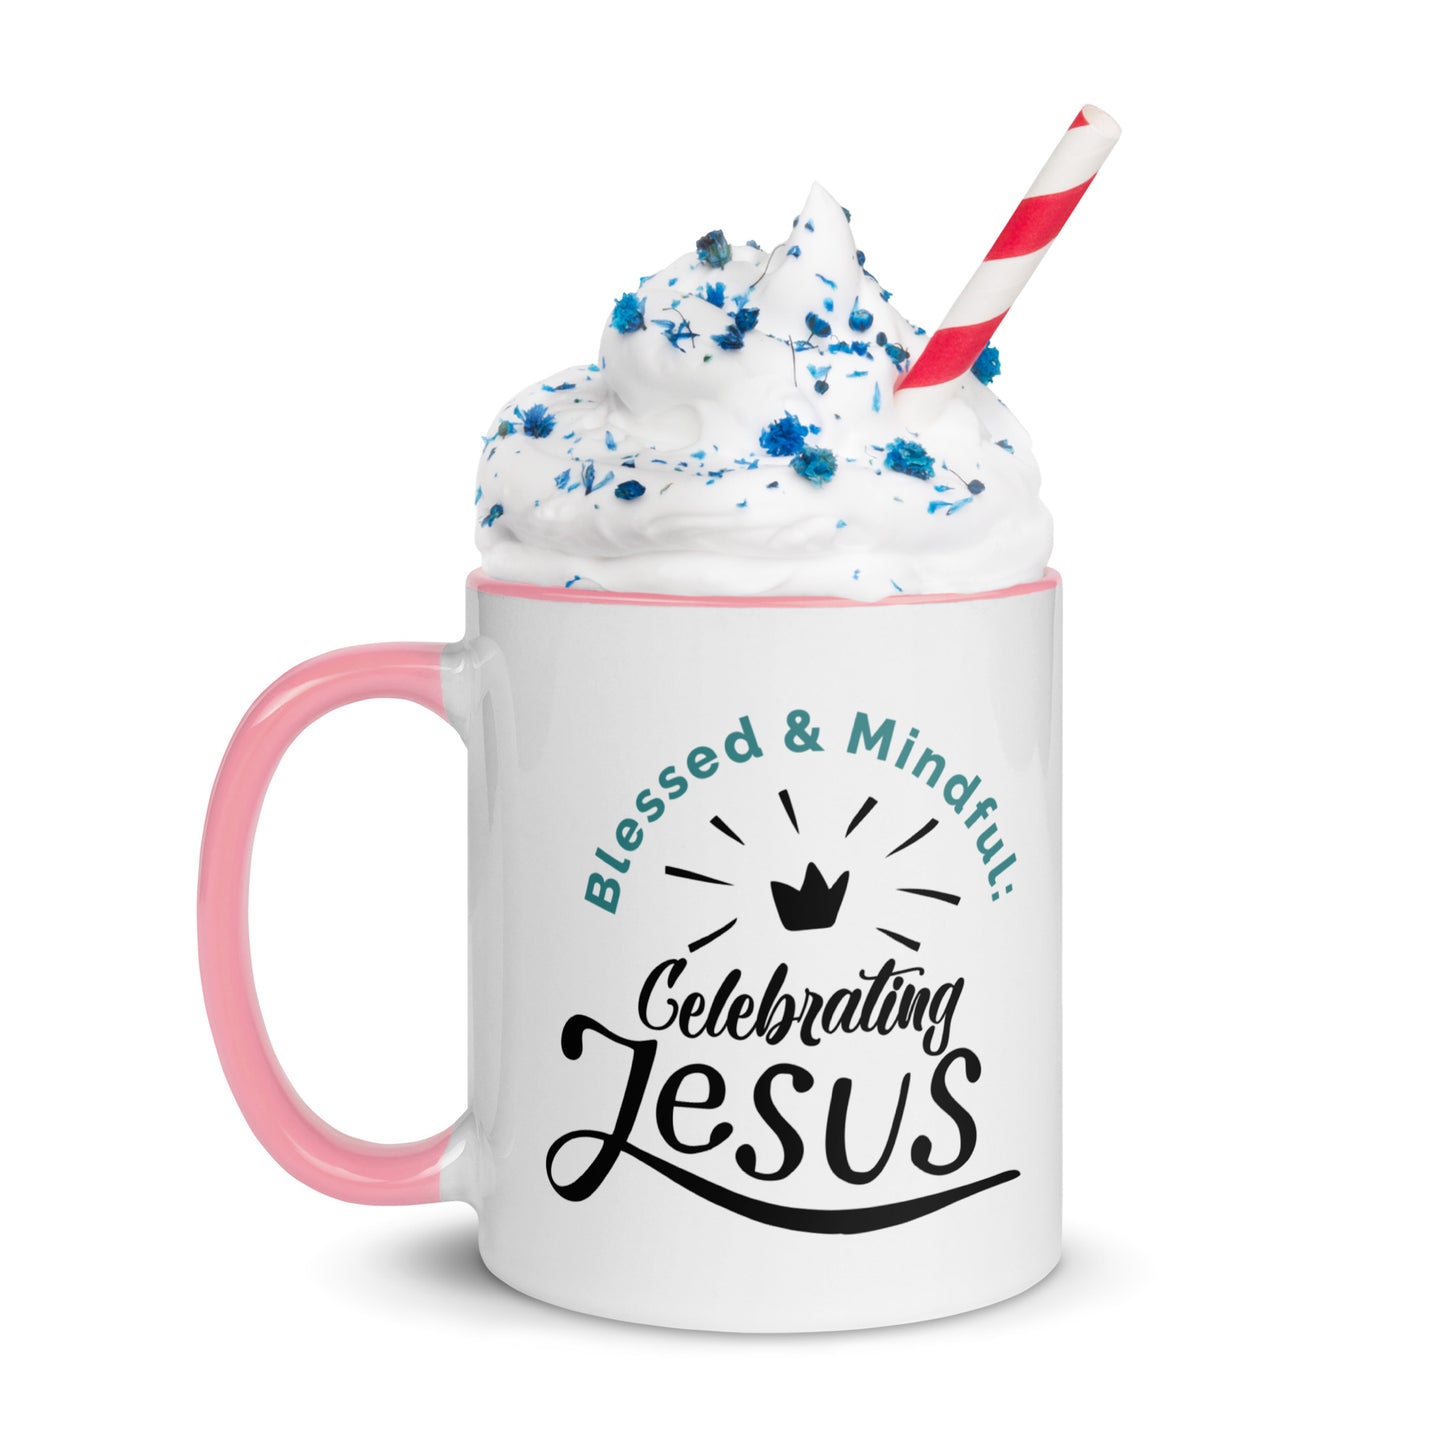 Blessed and Mindful: Double-Printed Celebrating Jesus Vibrant-Toned Mug